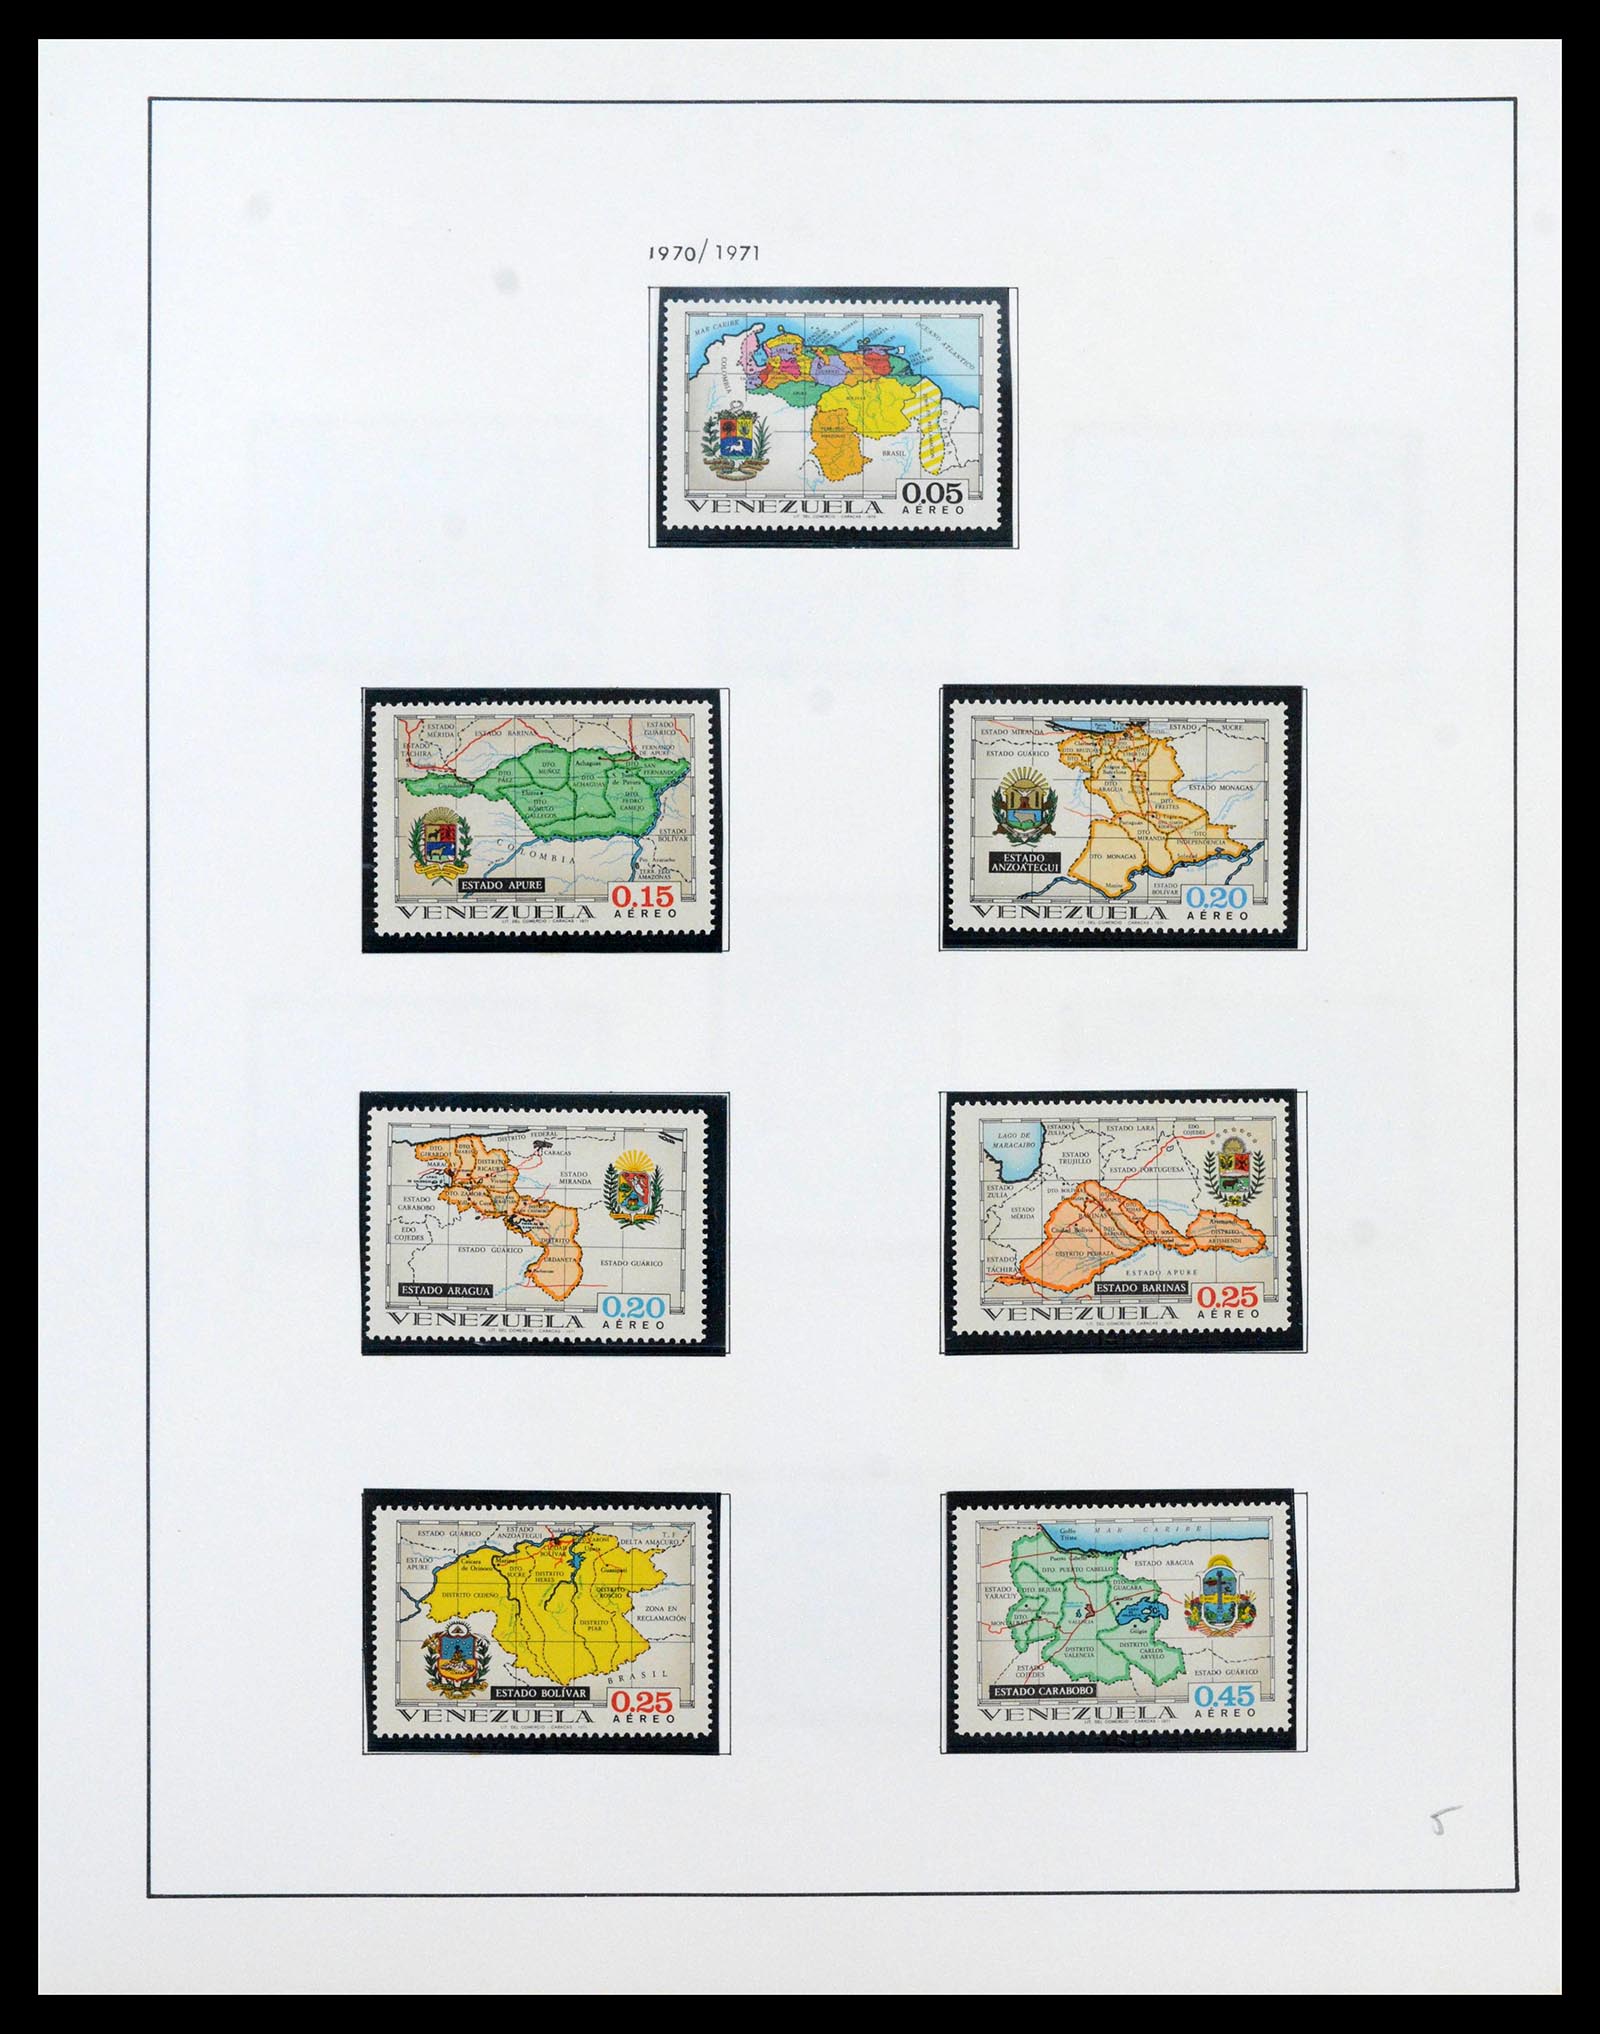 39436 0074 - Stamp collection 39436 Venezuela 1859-1985.